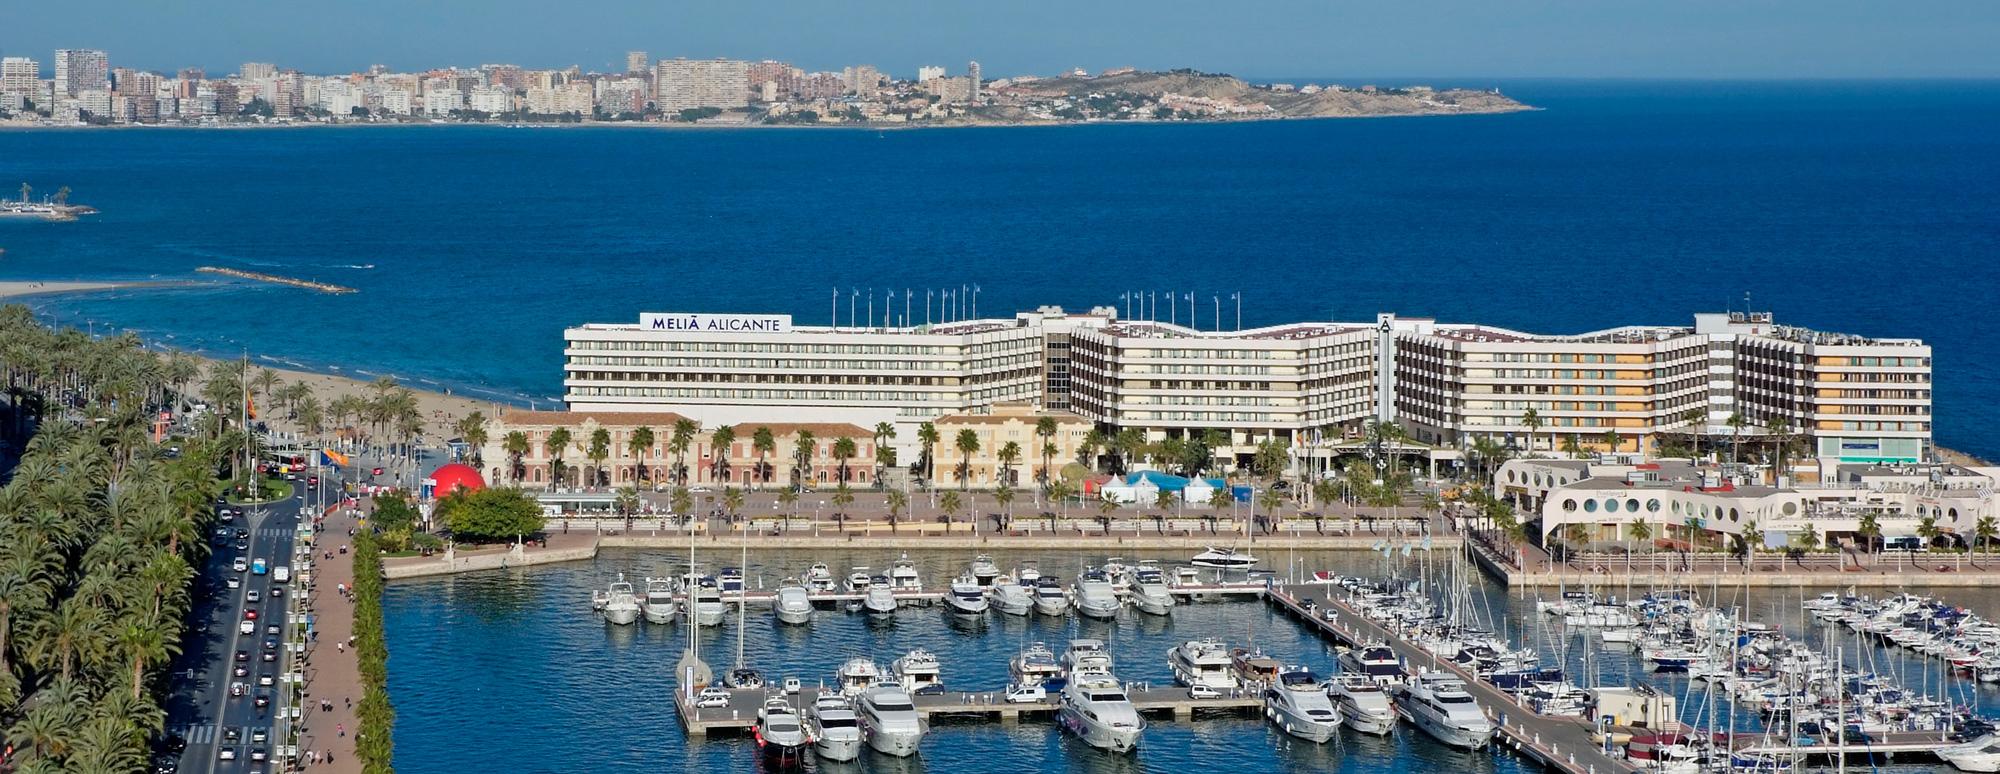 View Melia Alicante Hotel's scenic marina within stunning Costa Blanca.